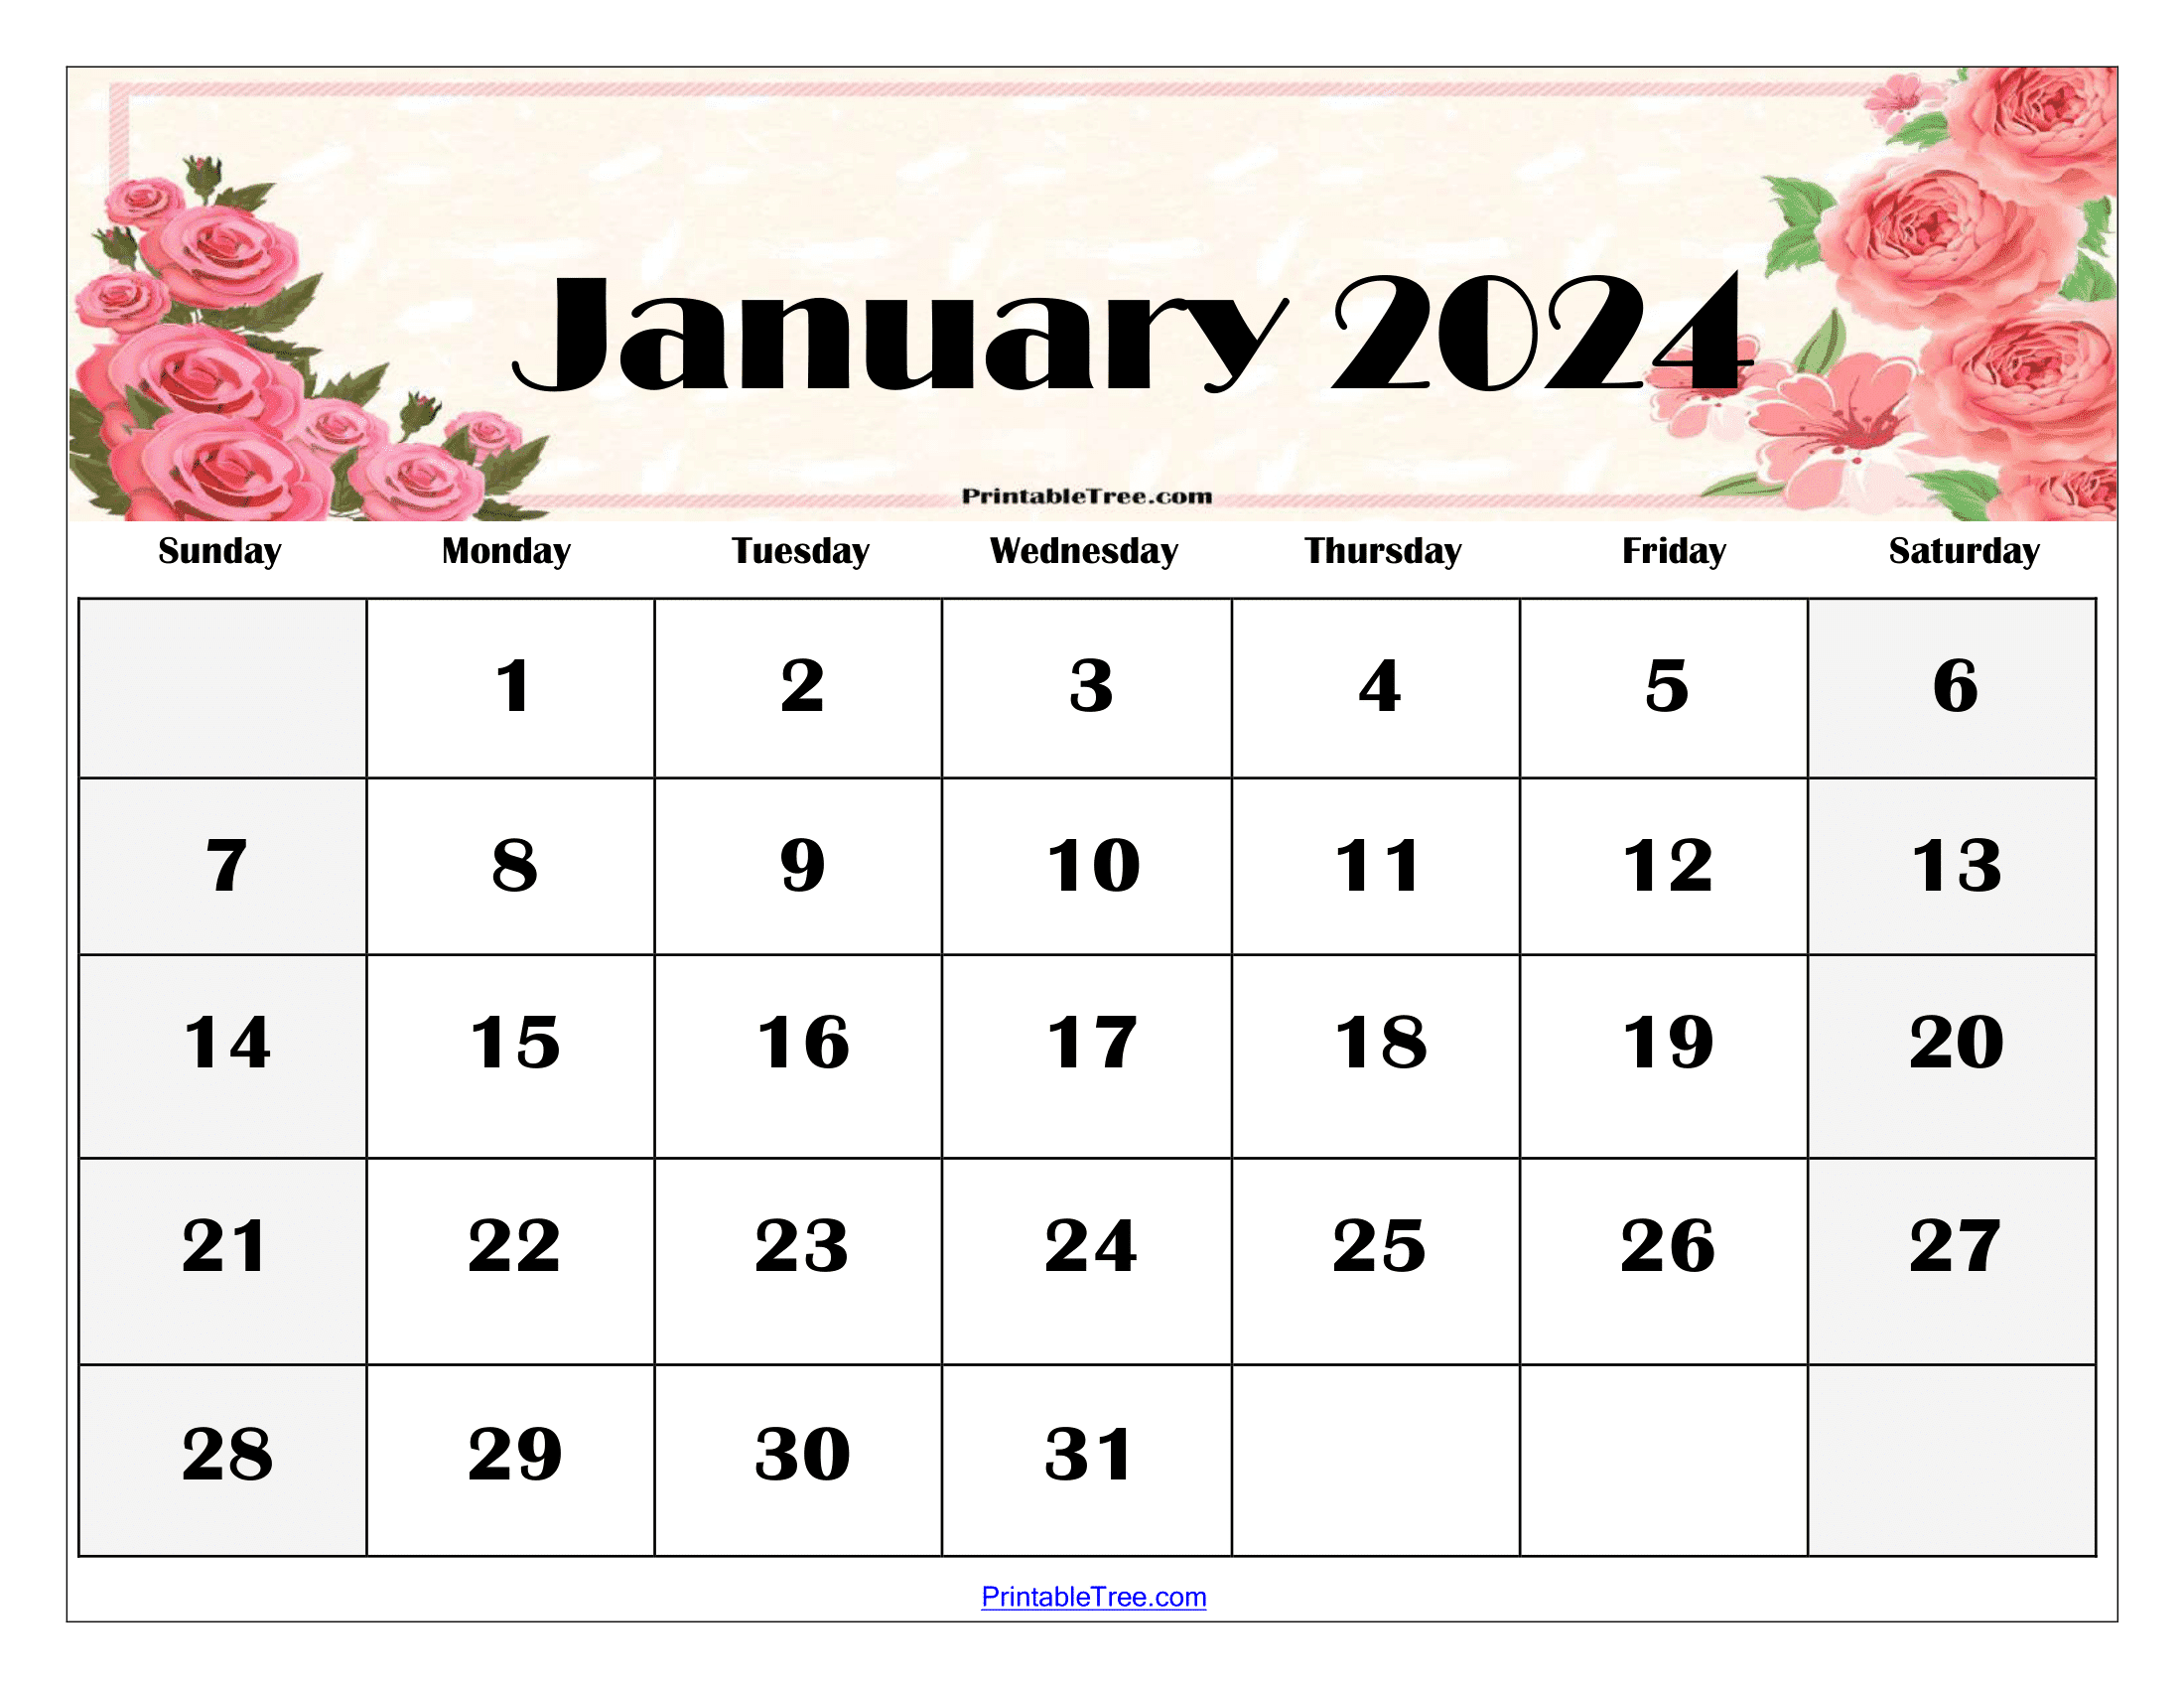 January 2024 Calendar Printable Pdf Template With Holidays for January 2024 Calendar Cute Printable